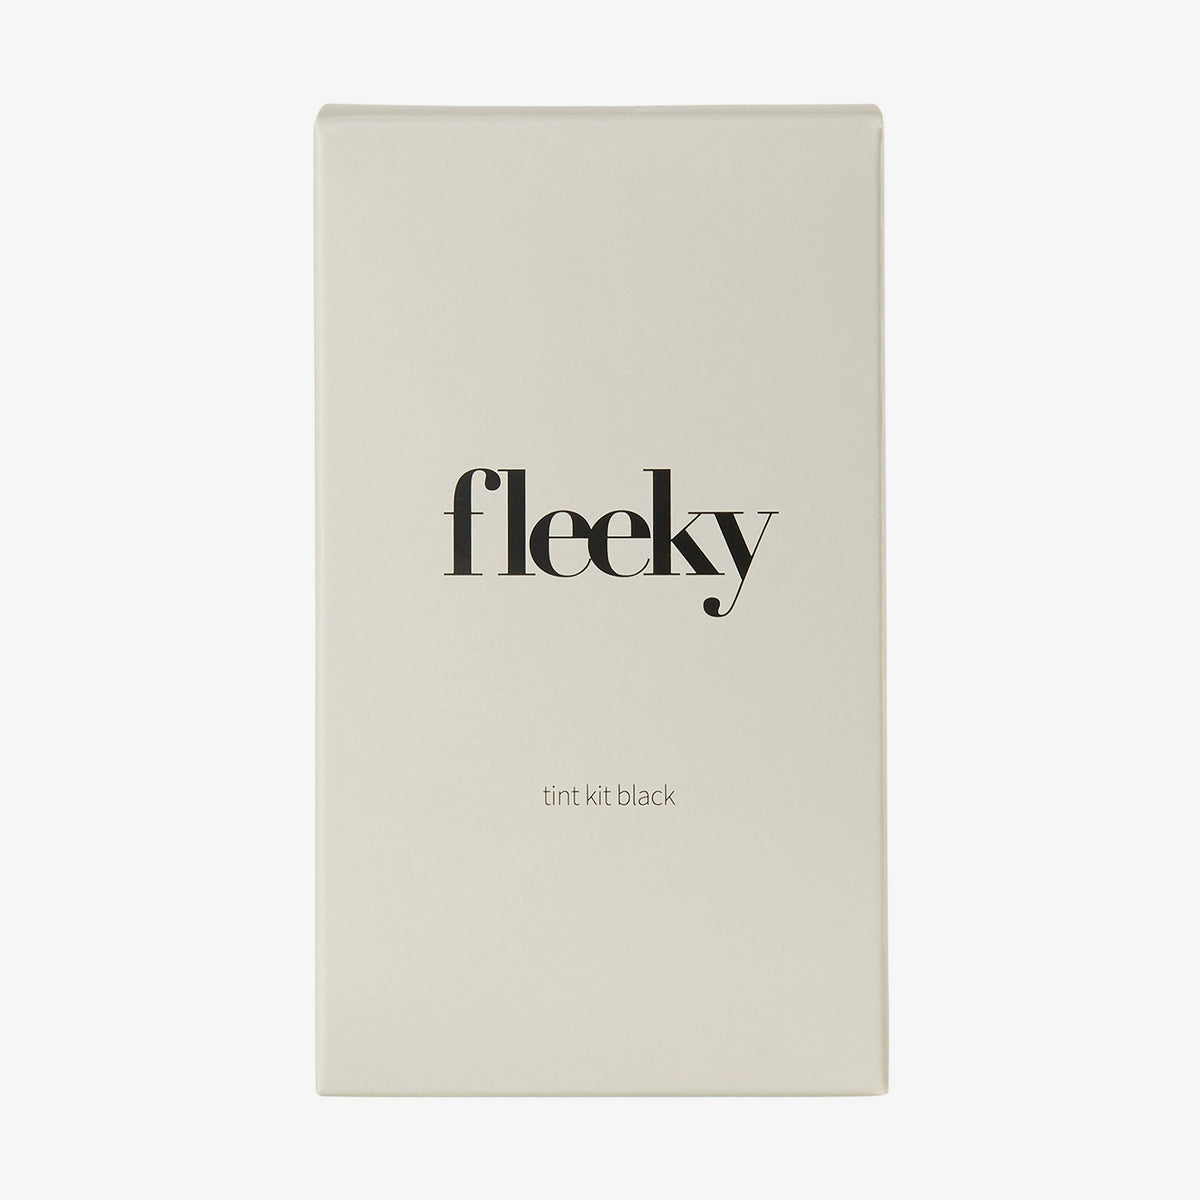 fleeky | Brow Tint Kit Black